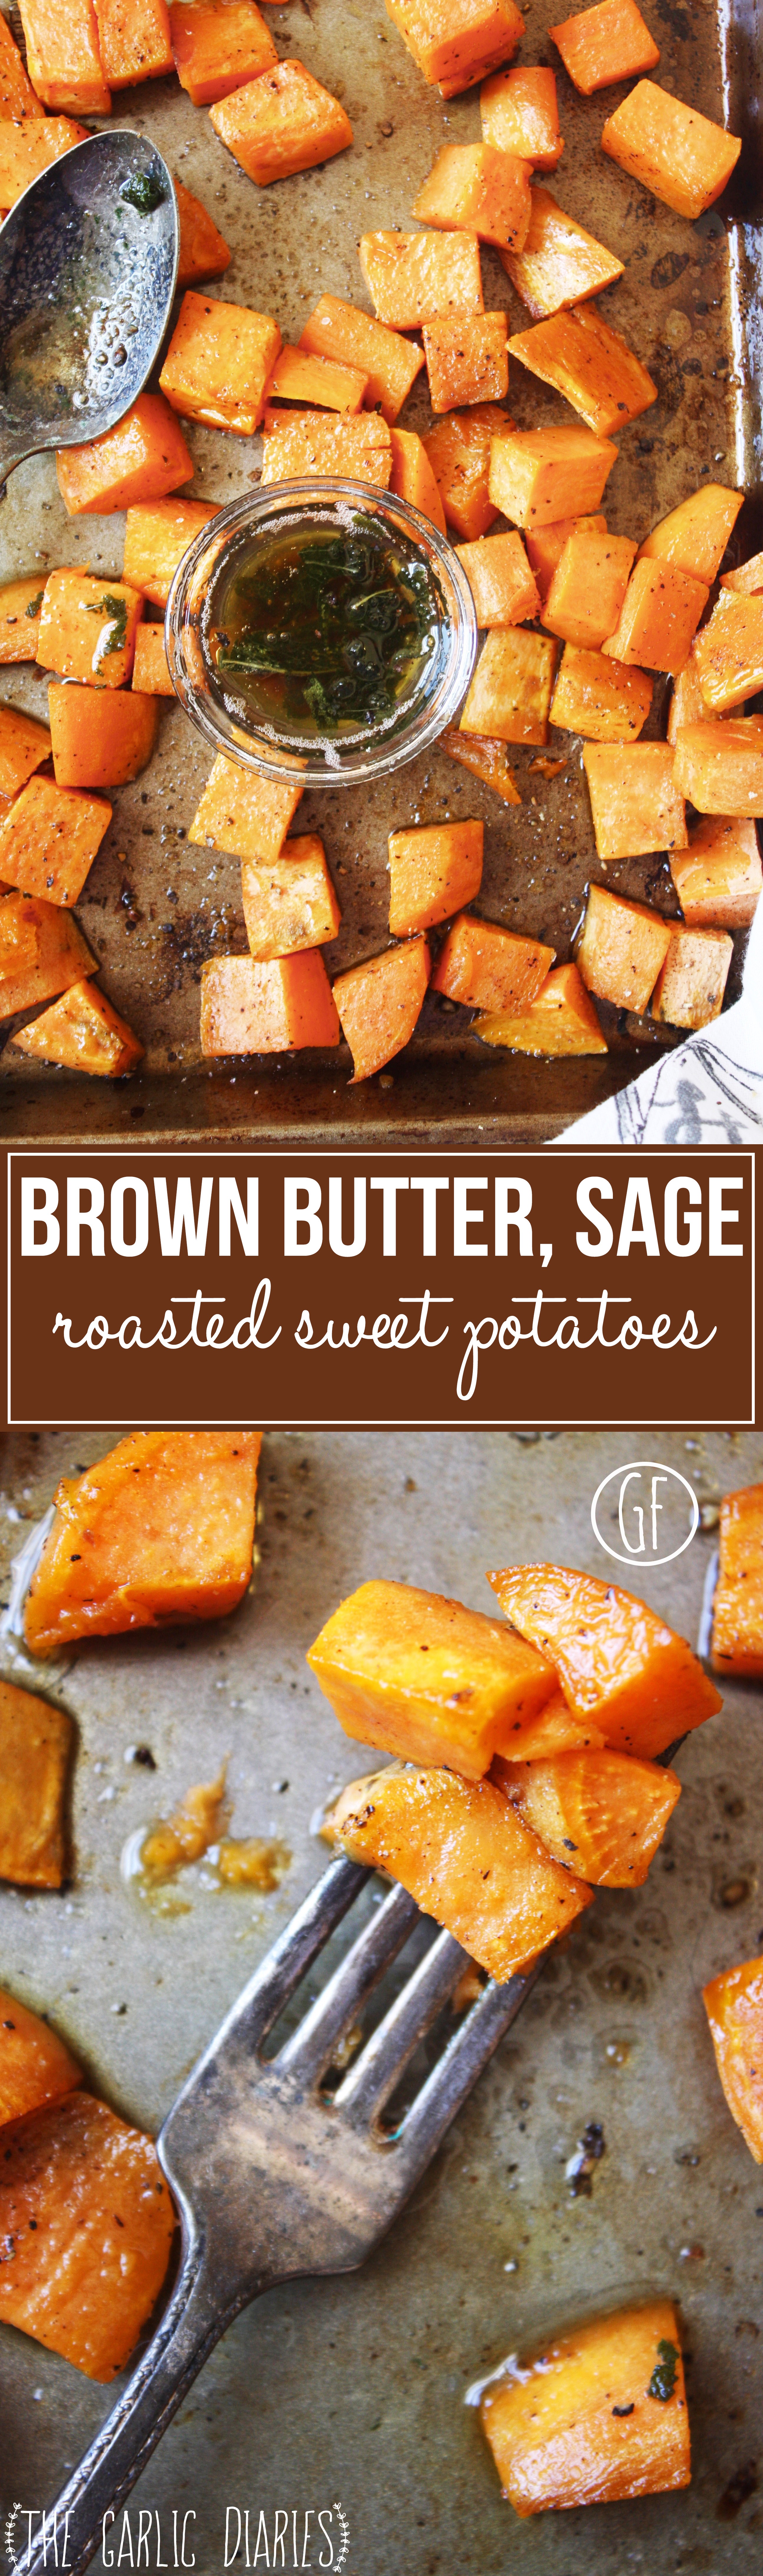 Roasted Sweet Potatoes With Fresh Sage